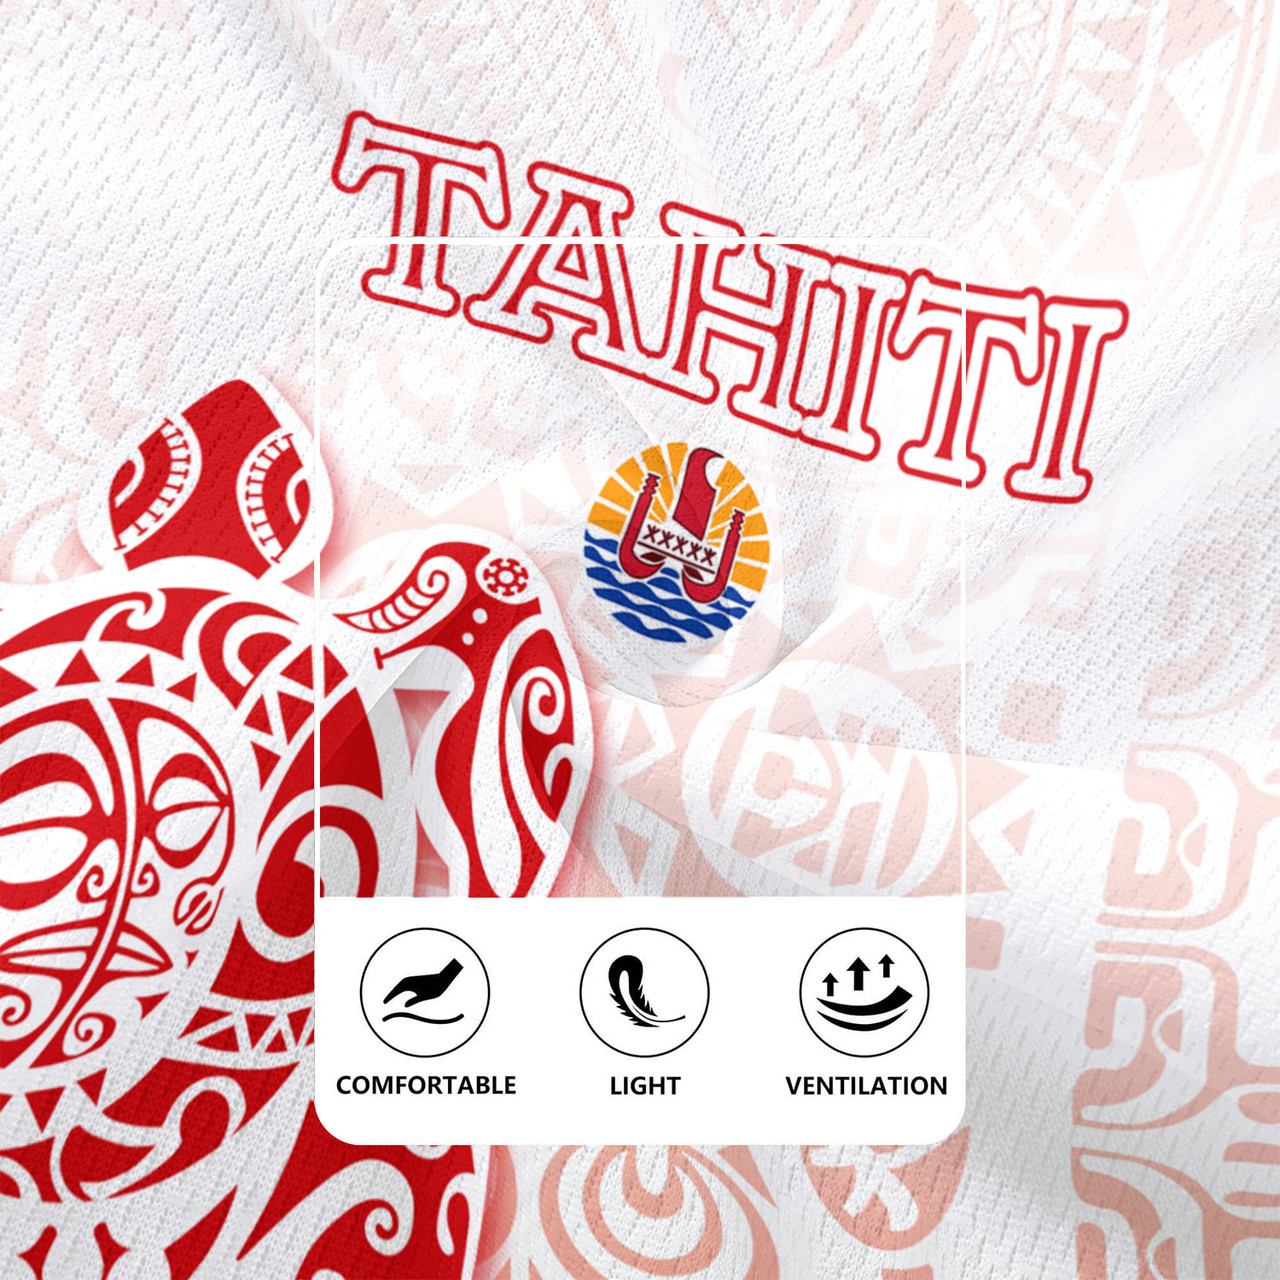 Tahiti Rugby Jersey Tahitian Tribal Tattoos Style